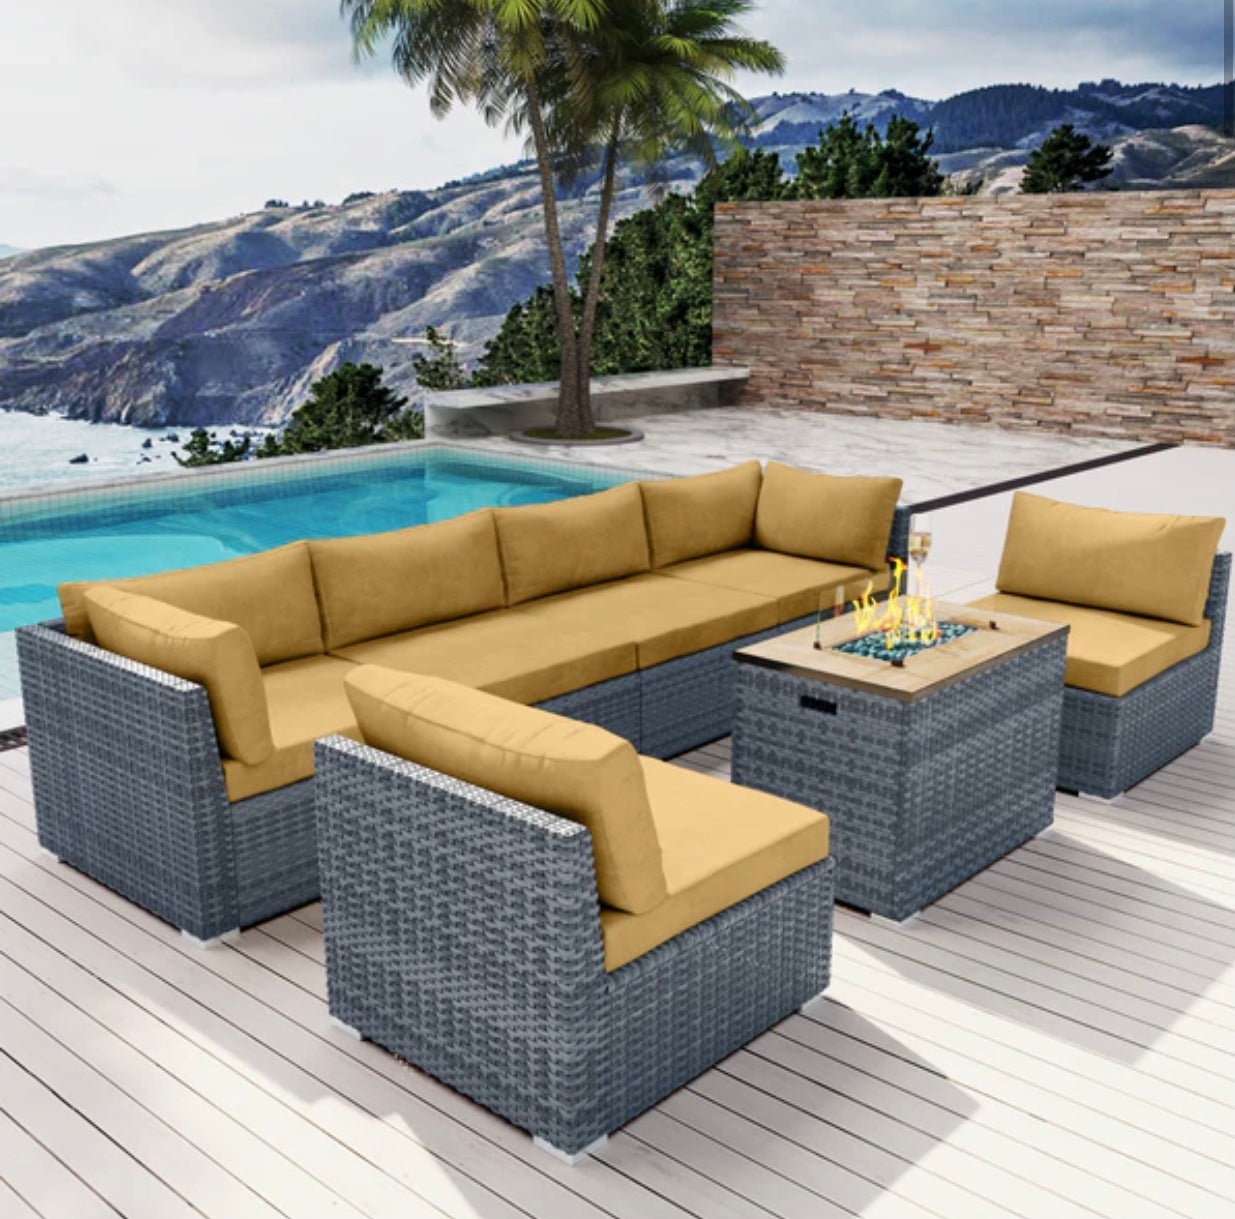 Beige Dark Brown 7 Seven piece Outdoor Patio Furniture with Propane Fire Pit Gray Wicker Santa Monica Beach